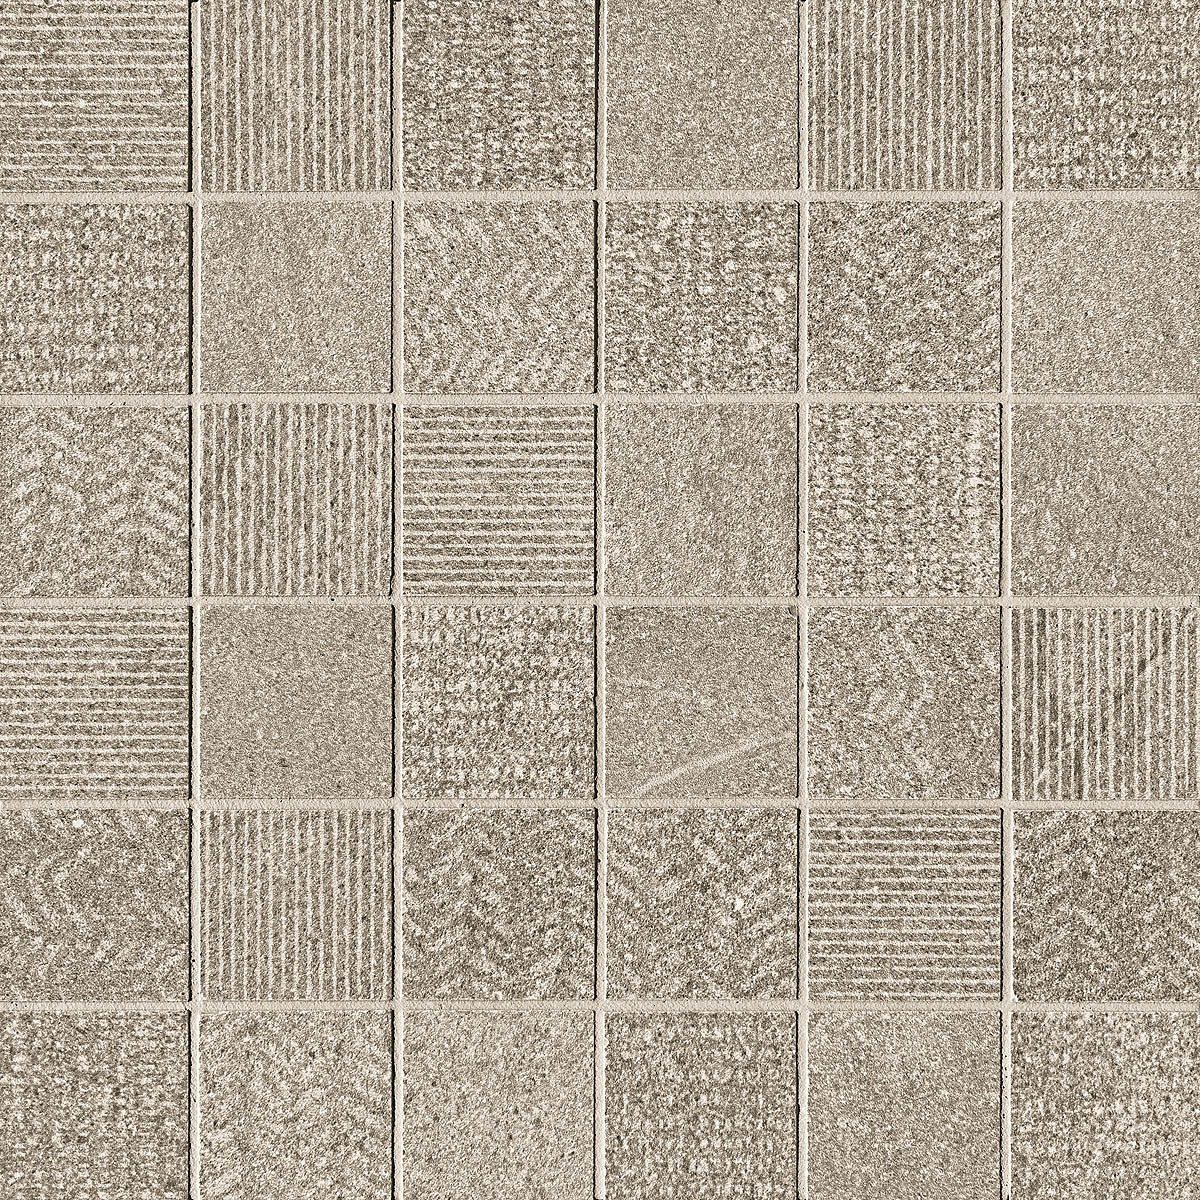 Craven Dunnill CDLG110 Hartington Mosaic Mix Taupe Wall Tile 300x300mm